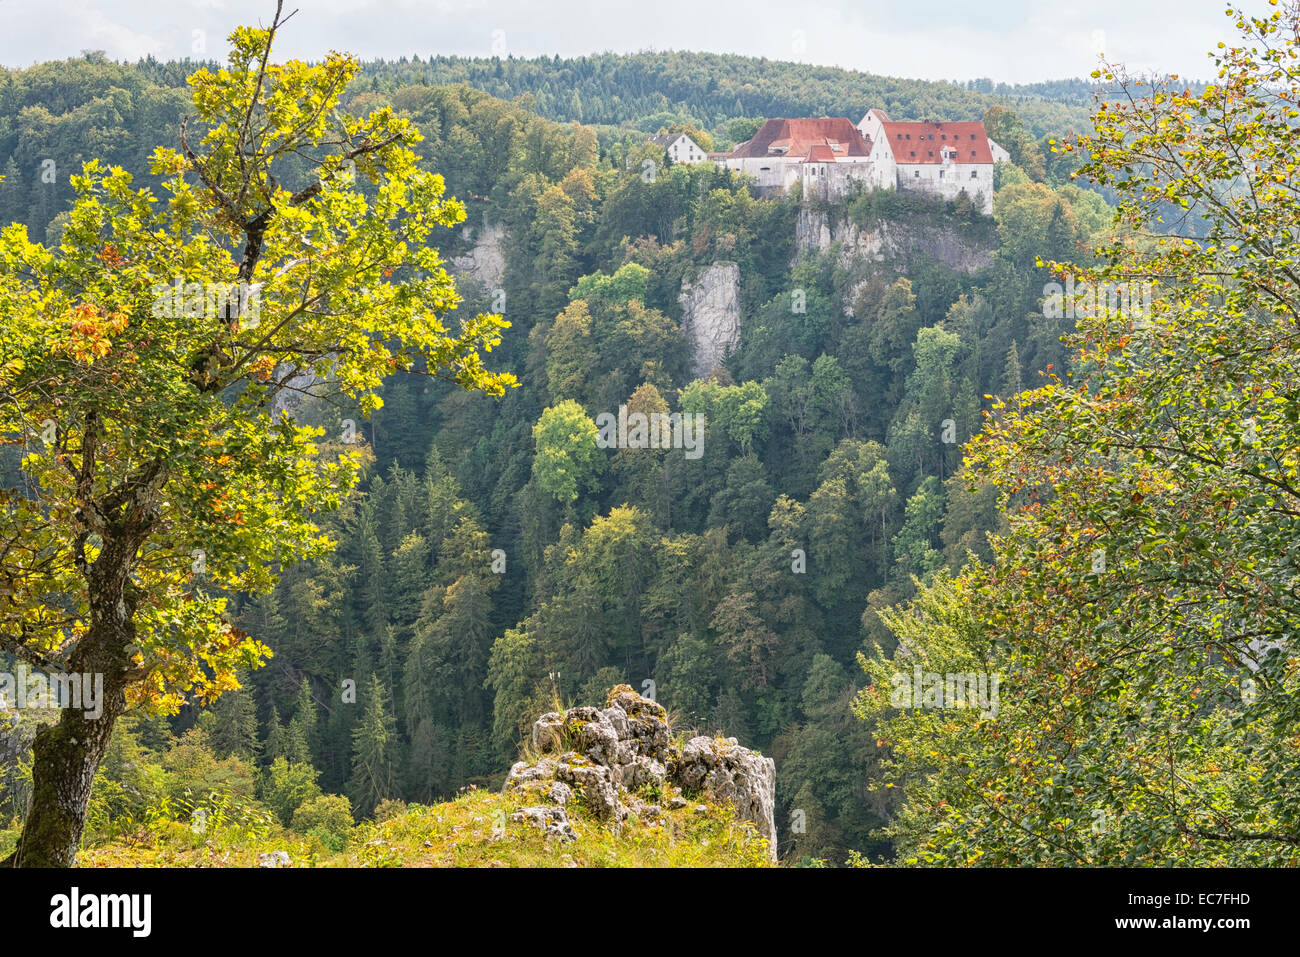 Germania Baden-Wuerttemberg, Alpi sveve, Valle del Danubio, Leibertingen, vista da Bandfelsen al castello di Wildenstein Foto Stock